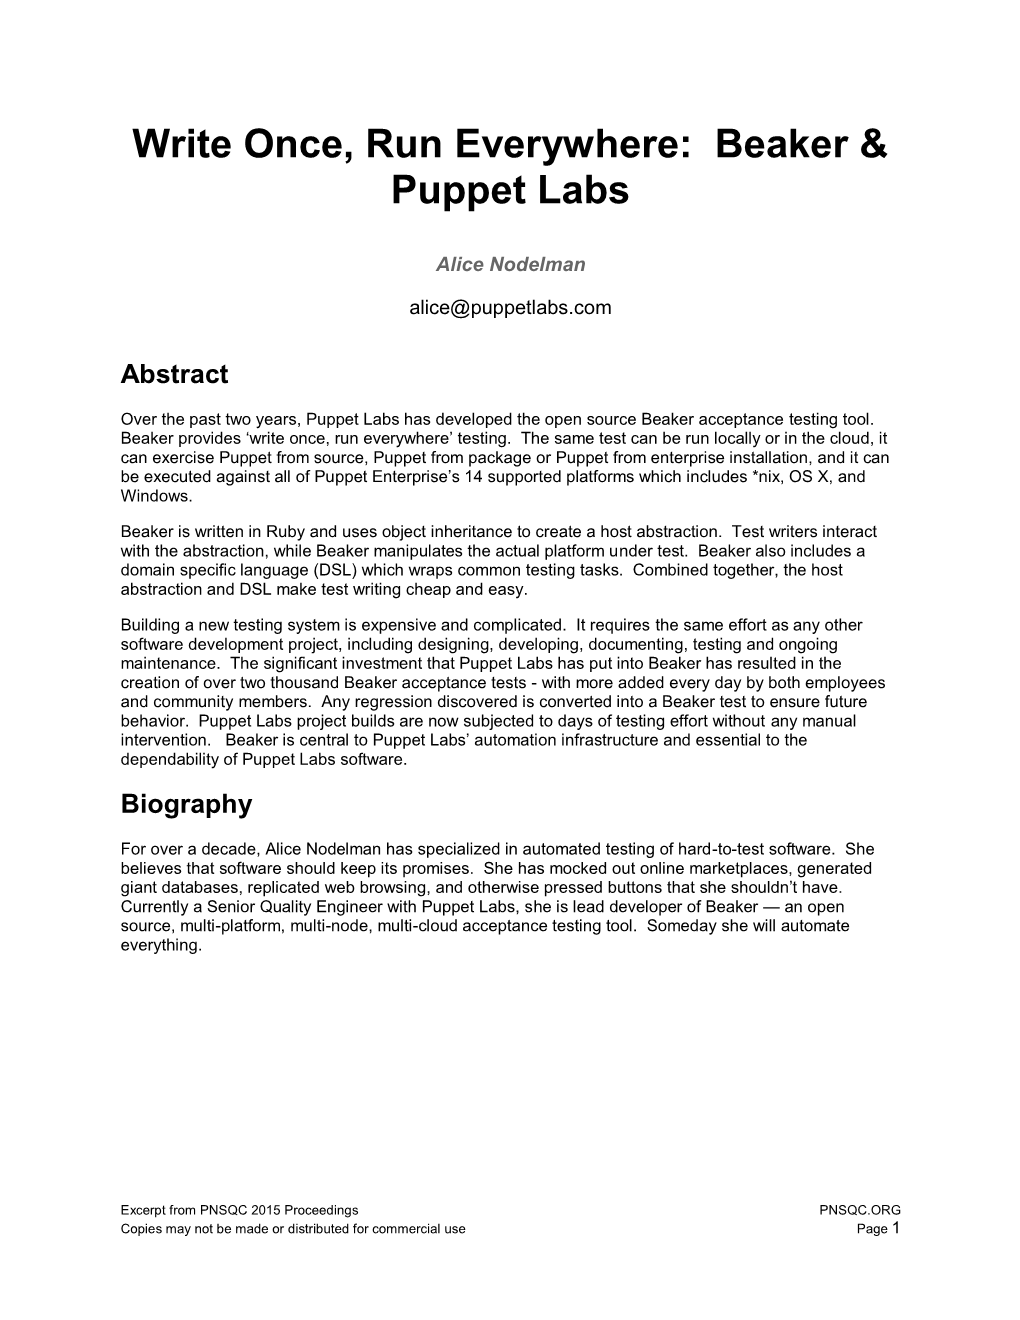 Beaker & Puppet Labs